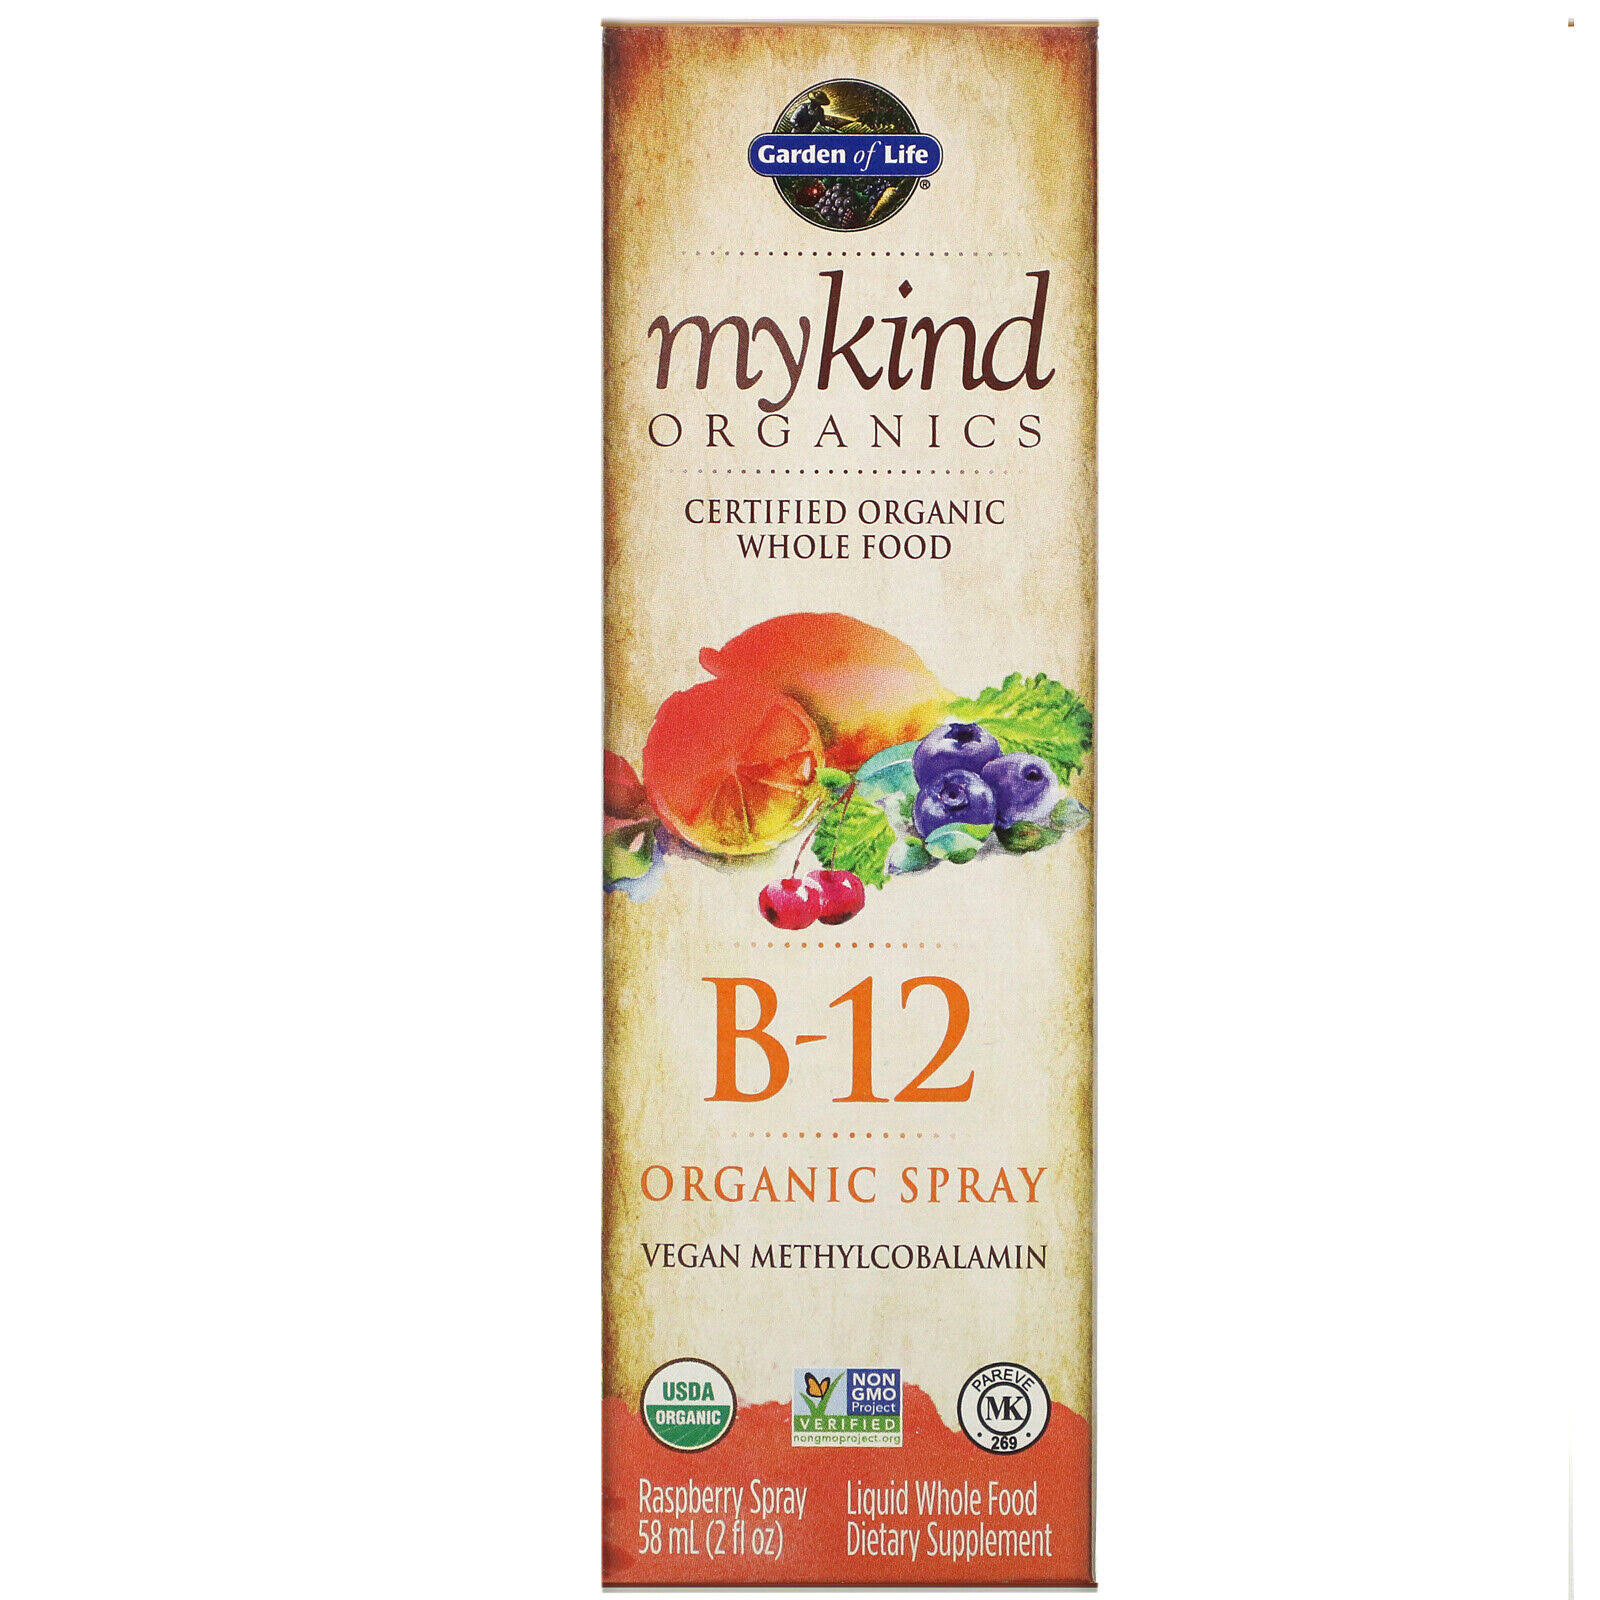 Garden of Life Mykind Organics B-12 Spray